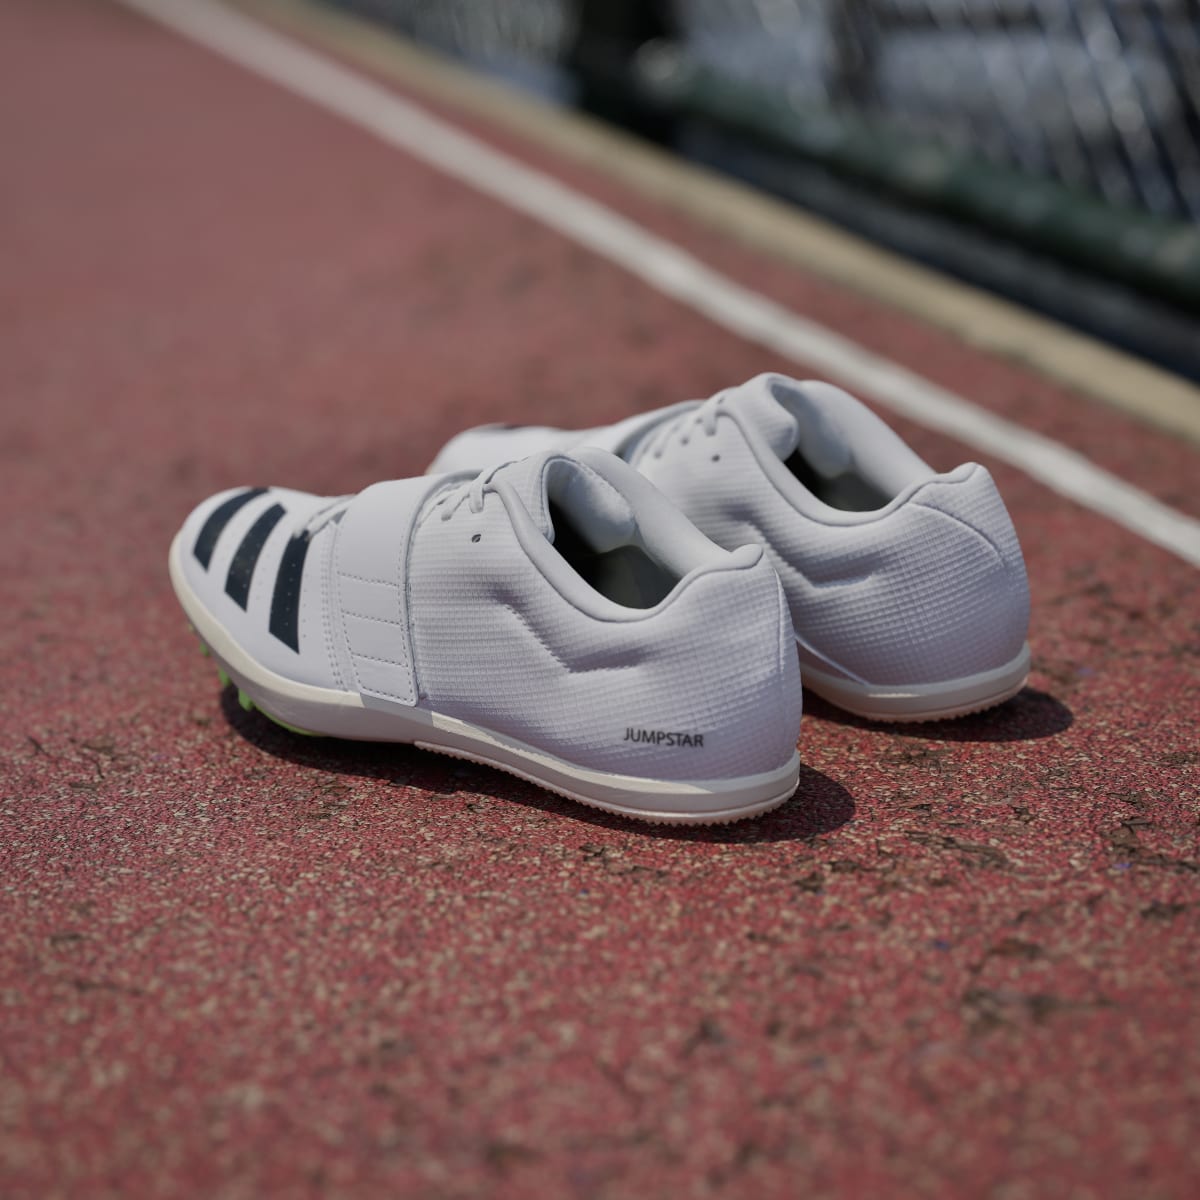 Adidas Scarpe da atletica Jumpstar. 5